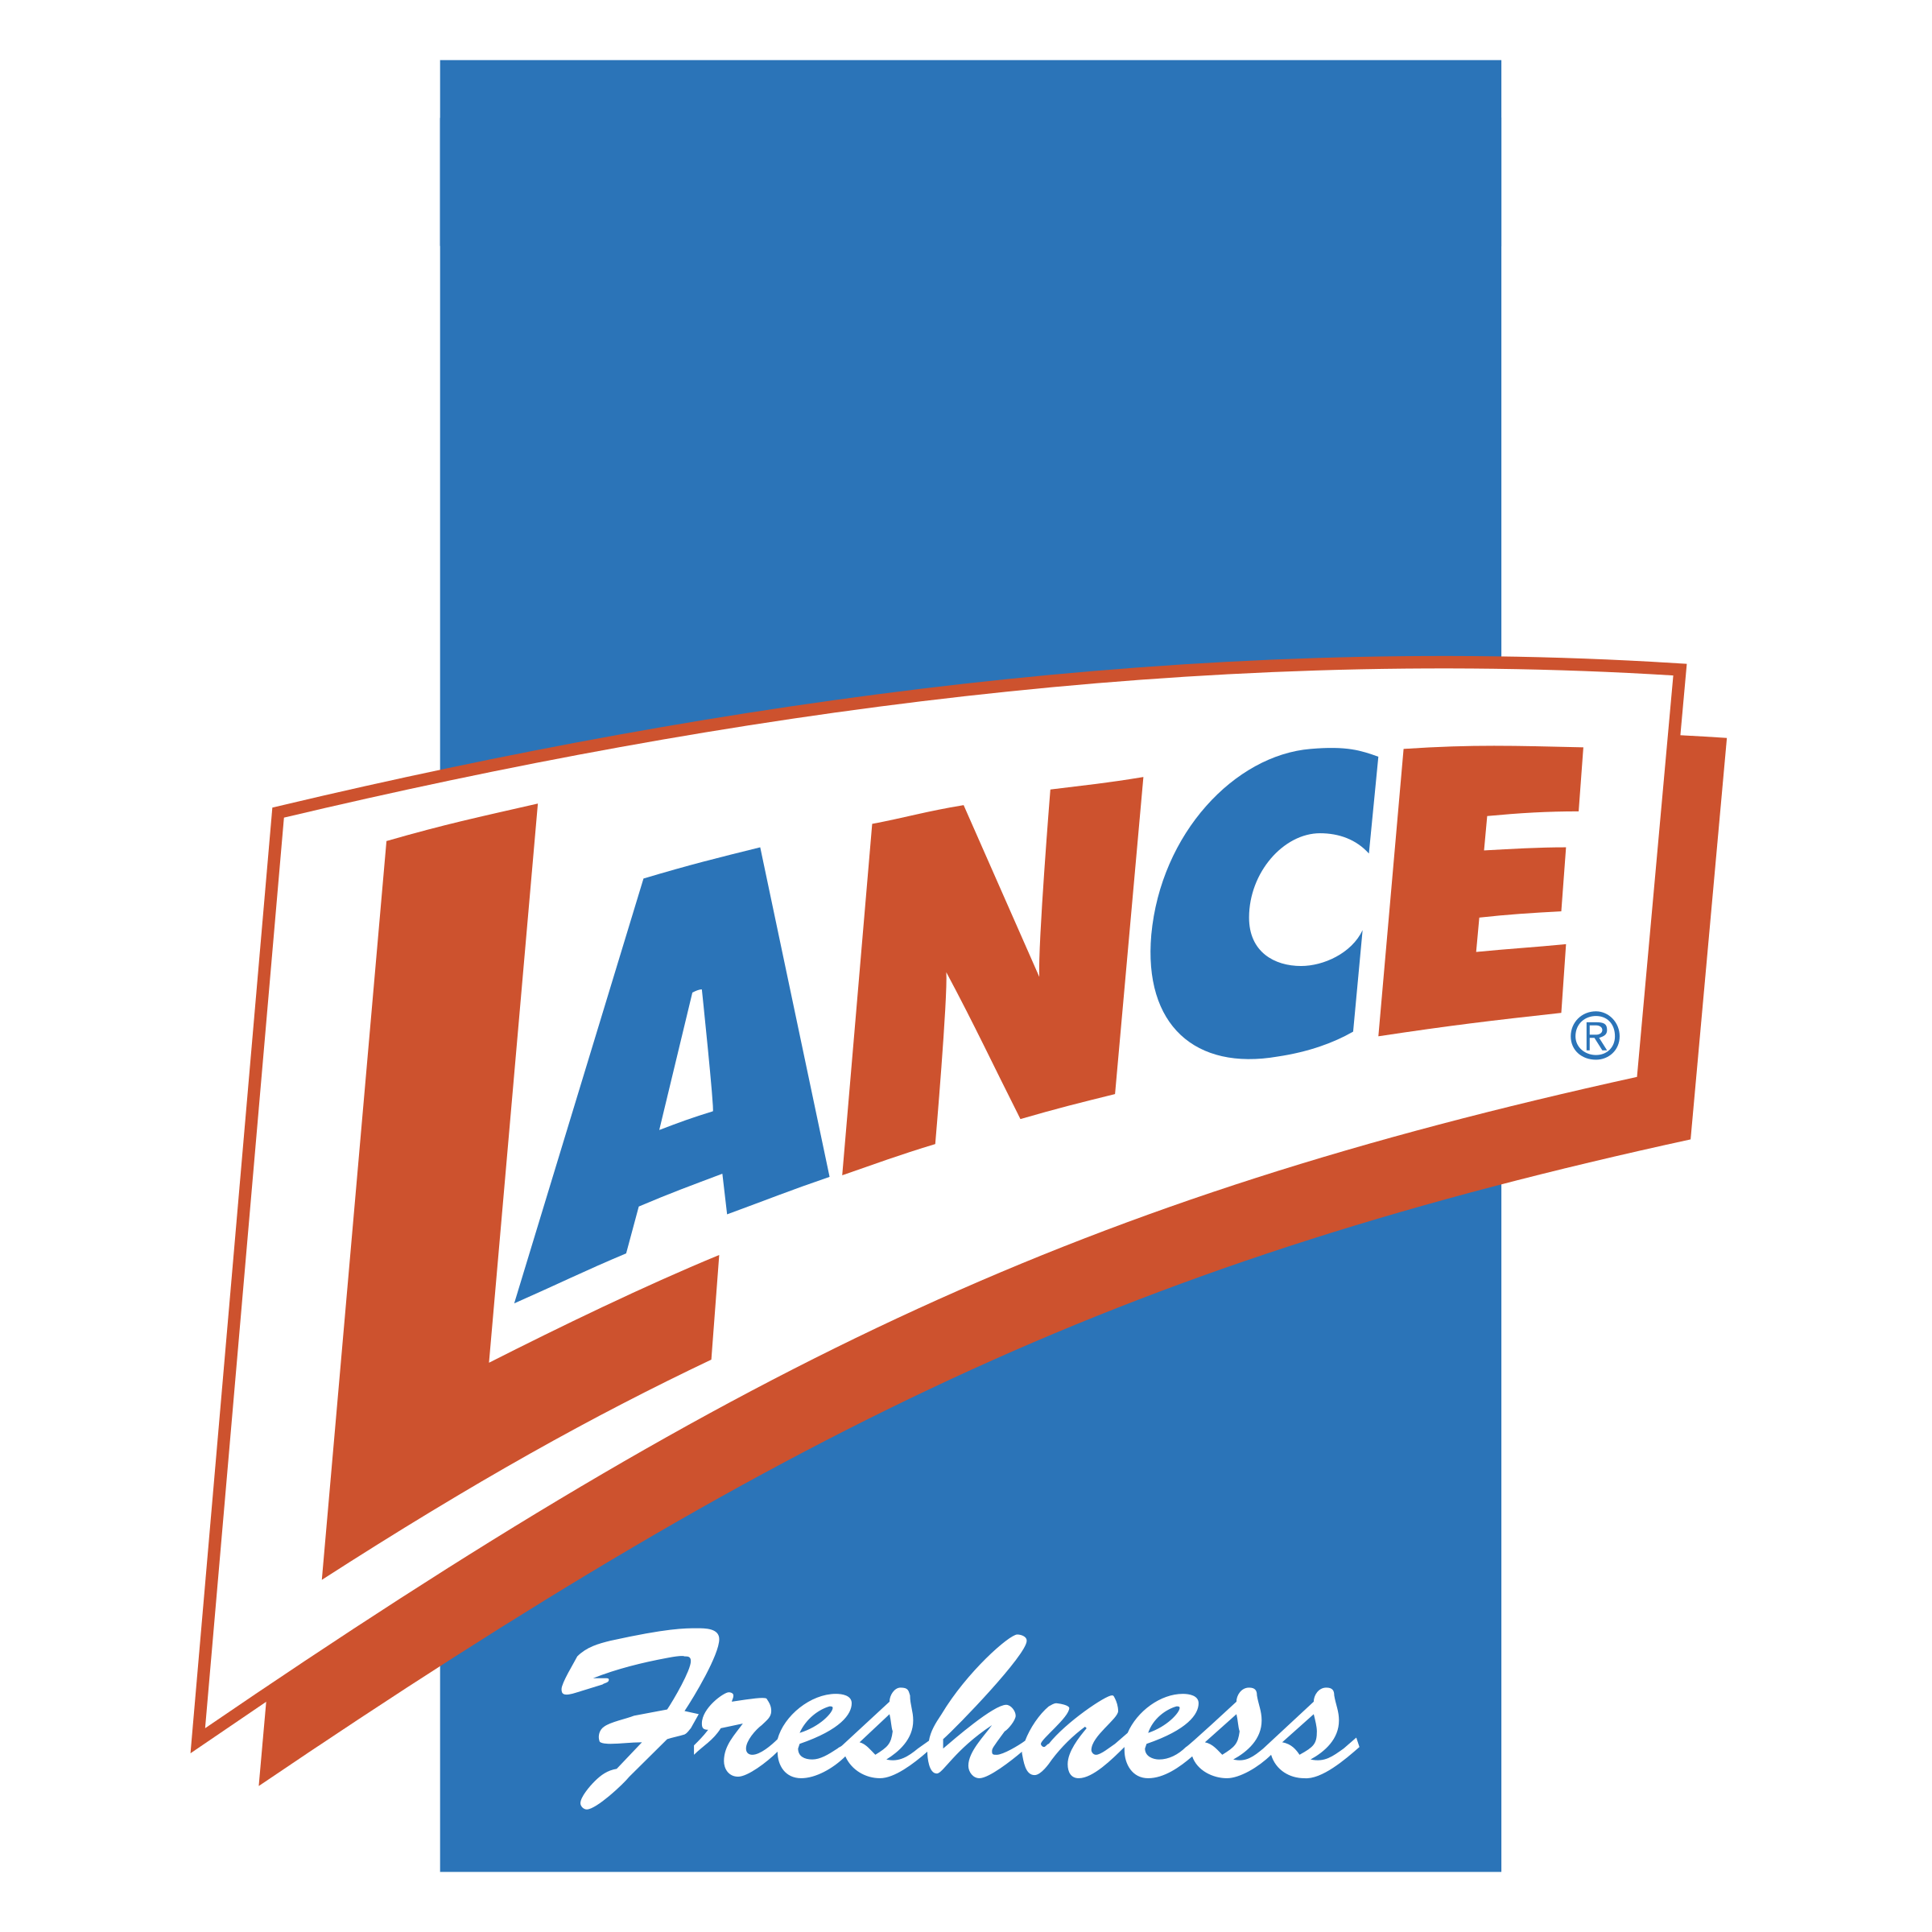 Lance Logo - Lance Logo PNG Transparent & SVG Vector - Freebie Supply